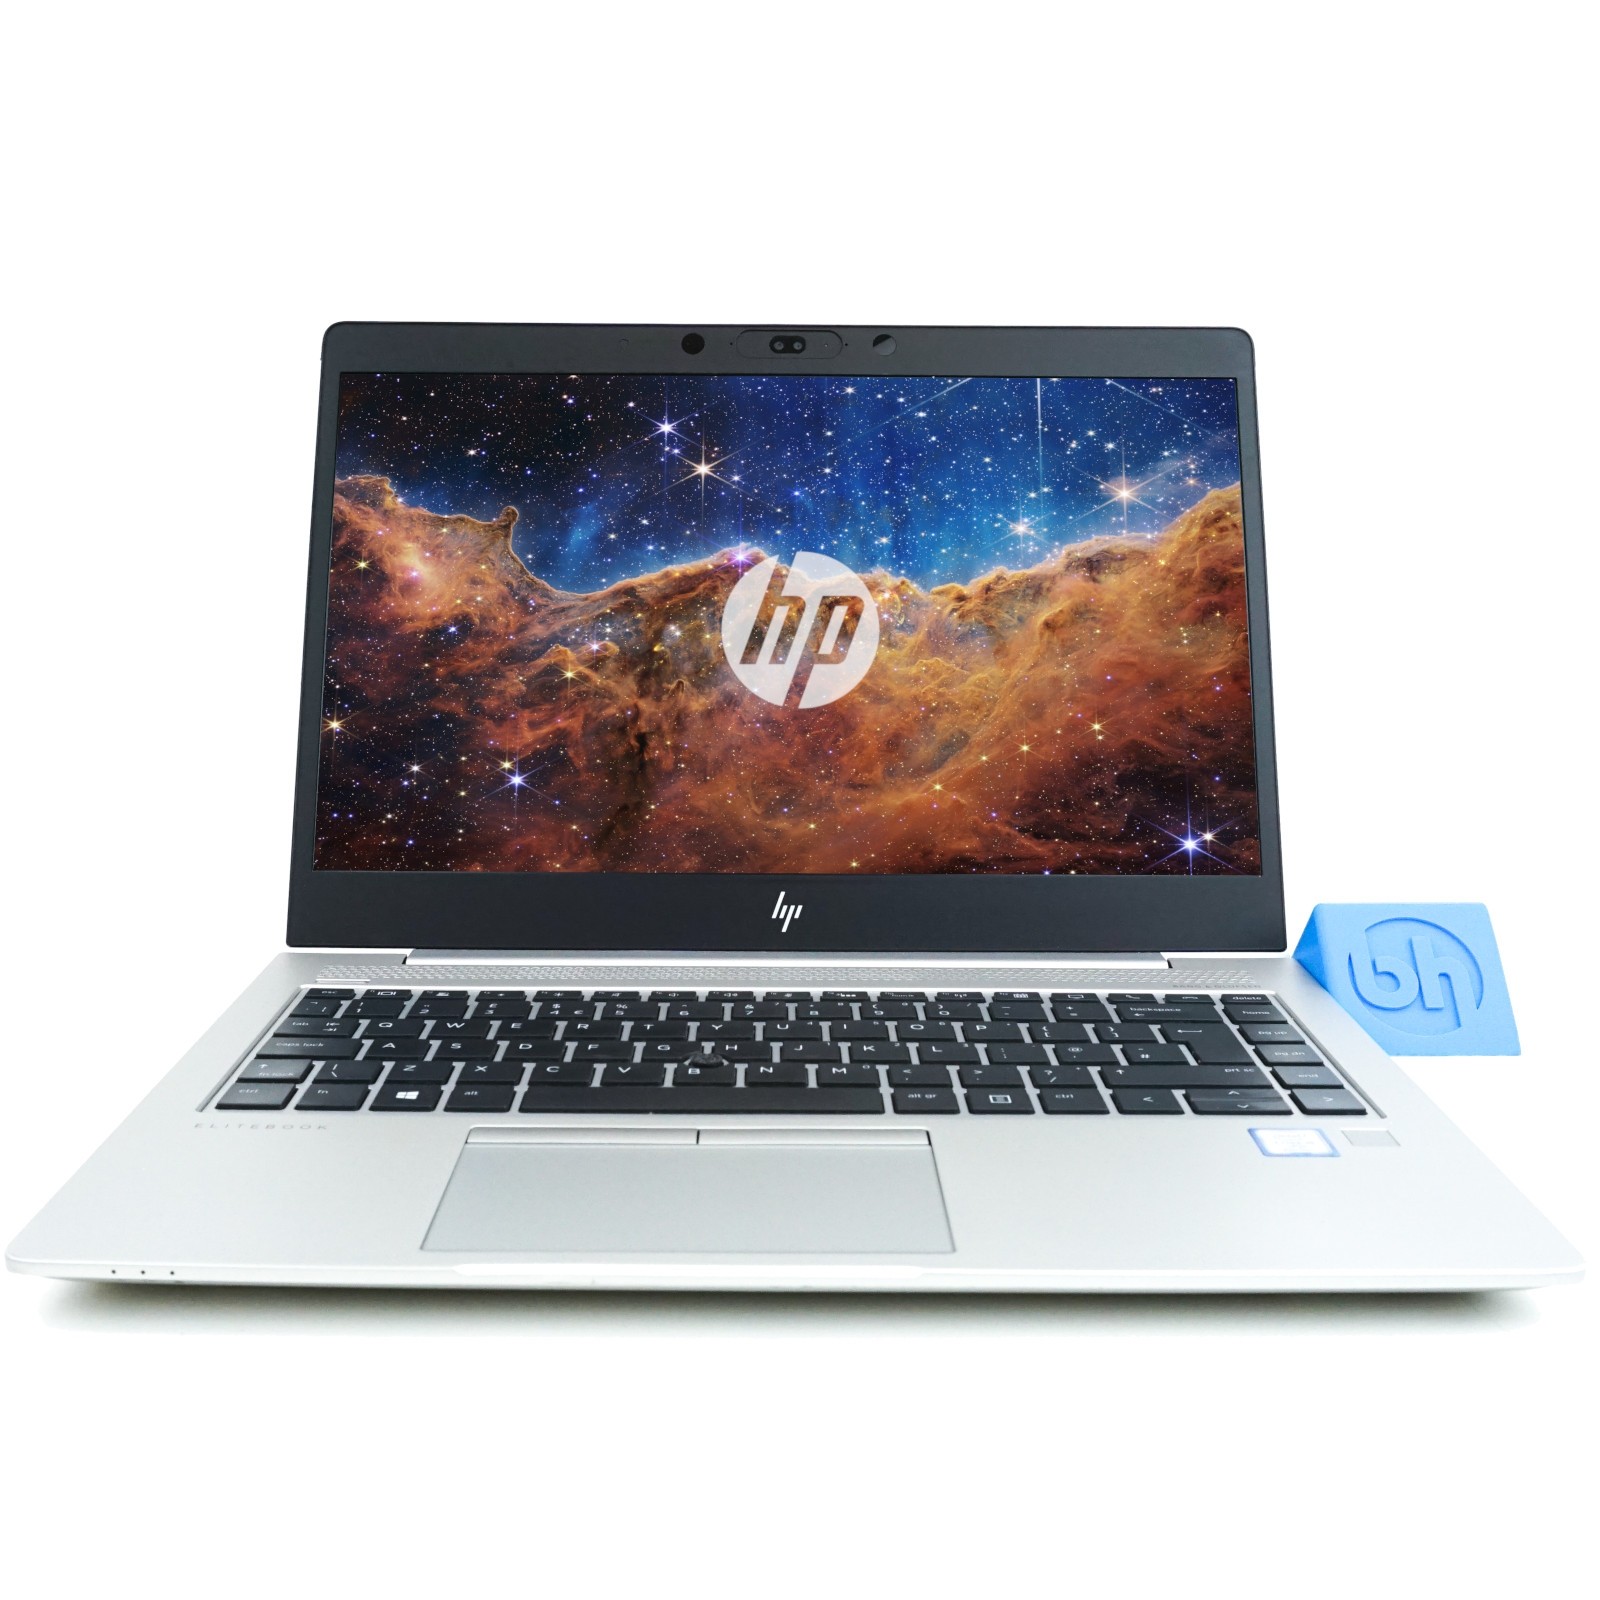 HP EliteBook 840 G5 14" Laptop - Intel i5 8th Gen, 8GB RAM, 256GB SSD, Windows 10 Pro (A+ Grade)